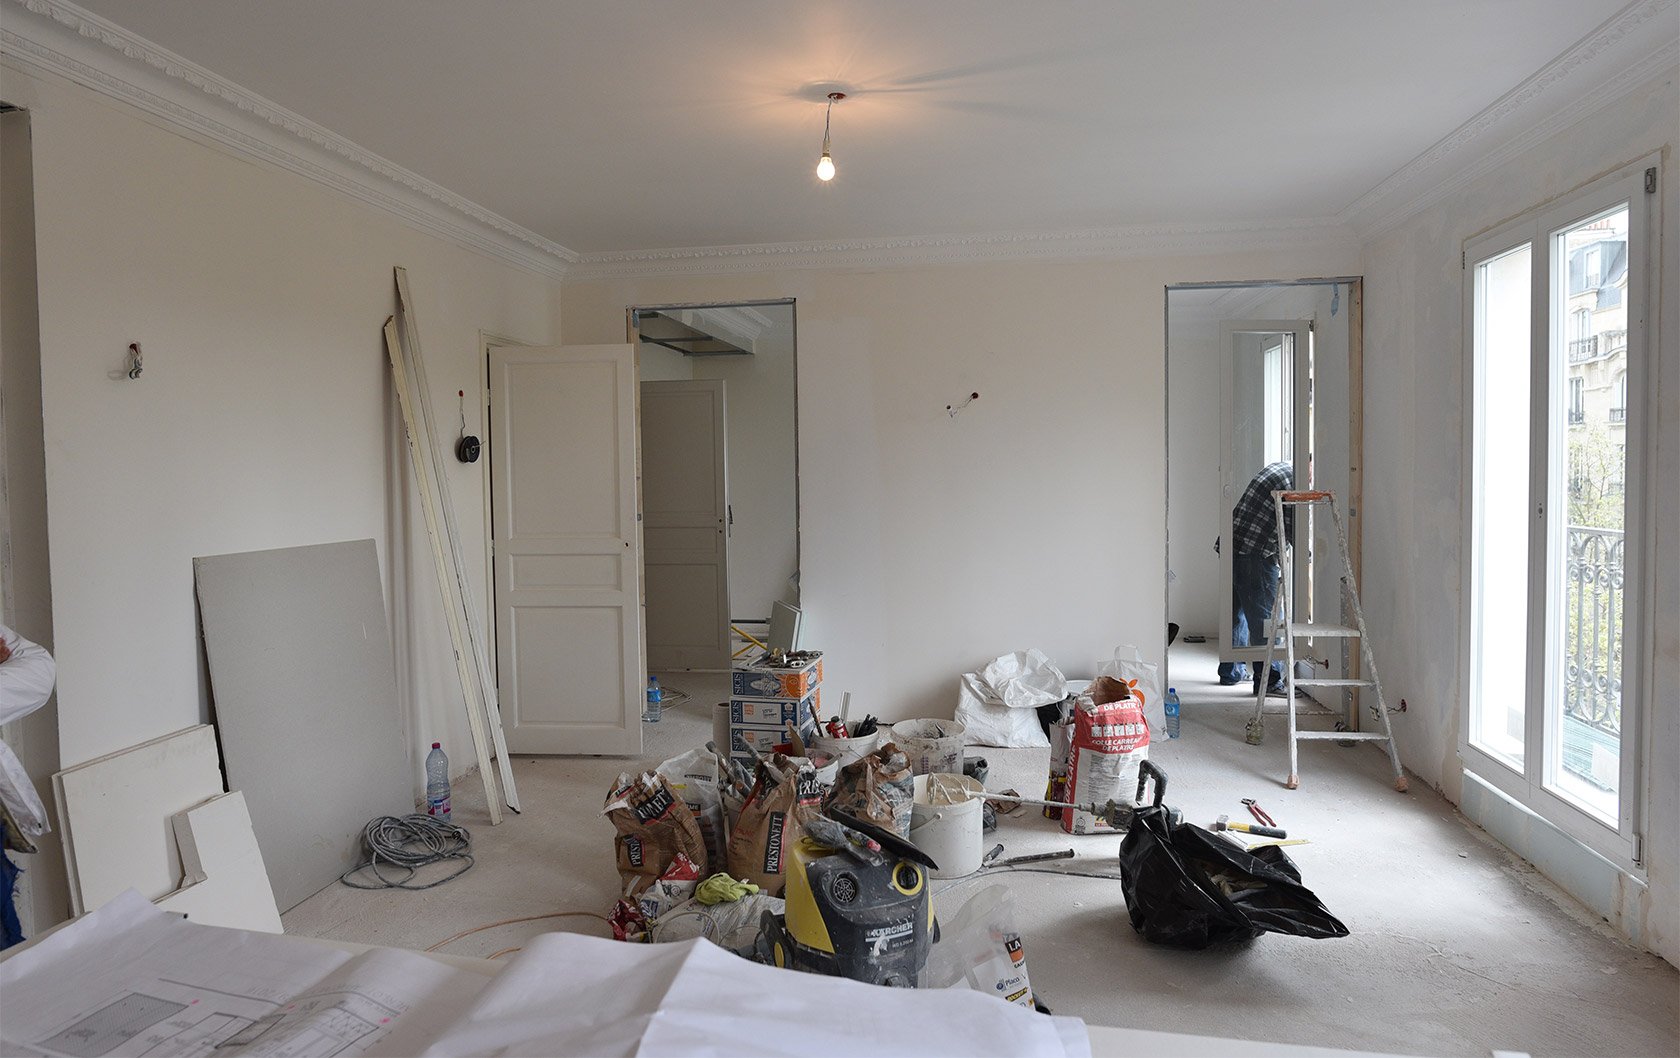 3b1-Merlot-works-view-of-living-room-towards-master-bedroom